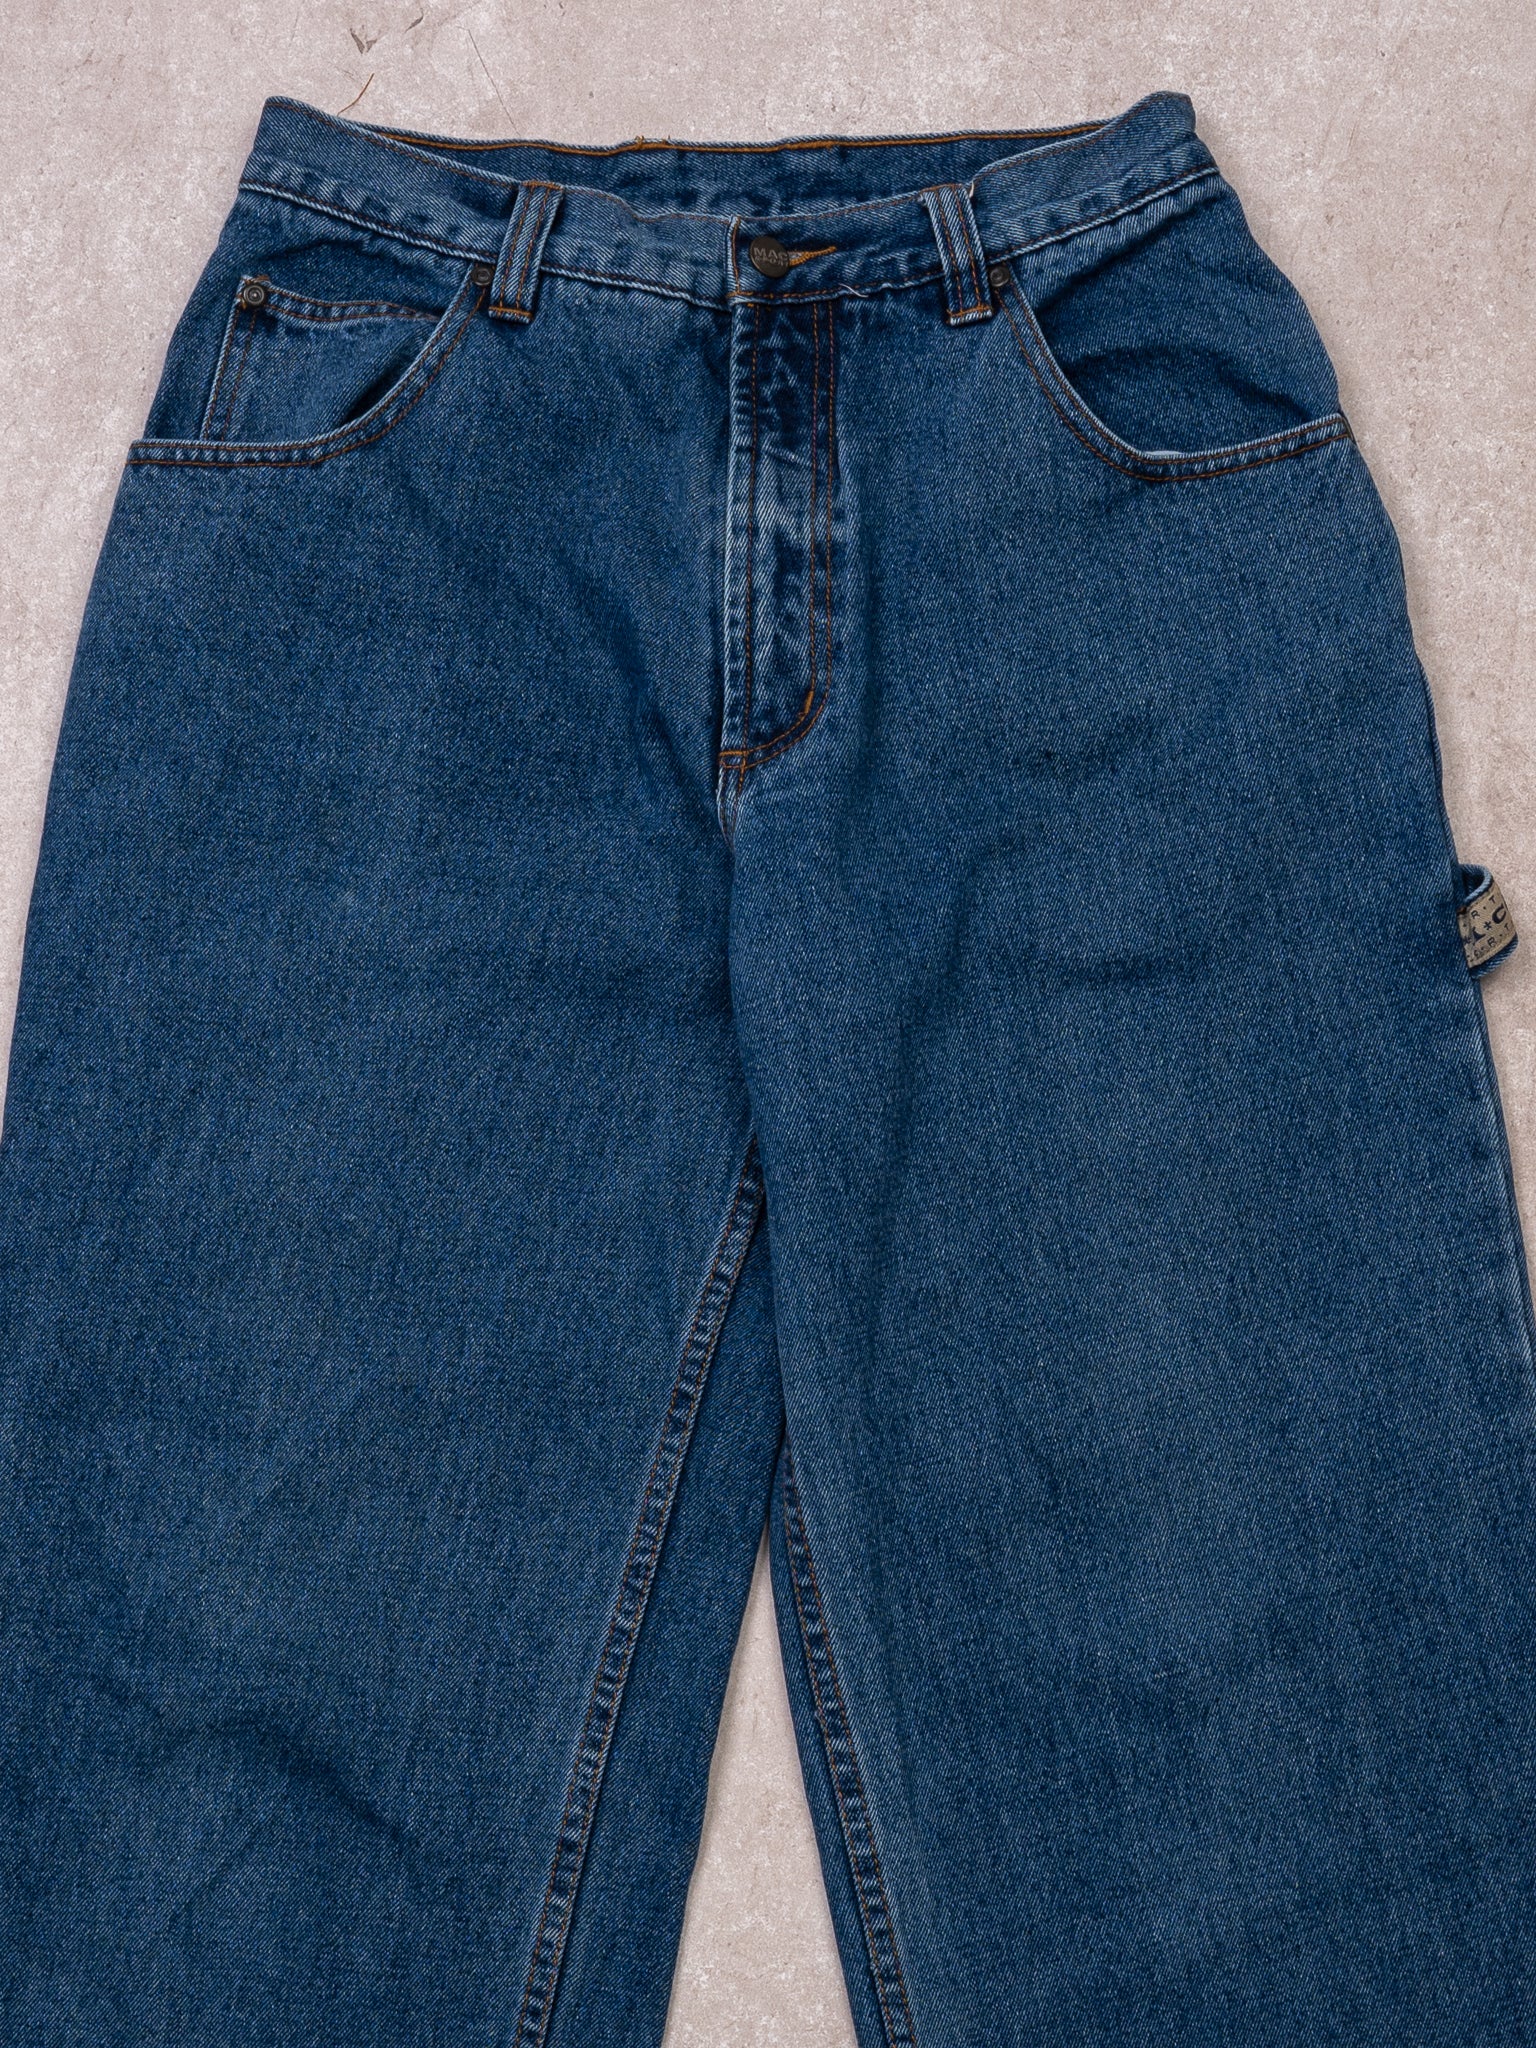 Vintage Y2K Blue Baggy Max Sport Cargo Pants (28 x 30)